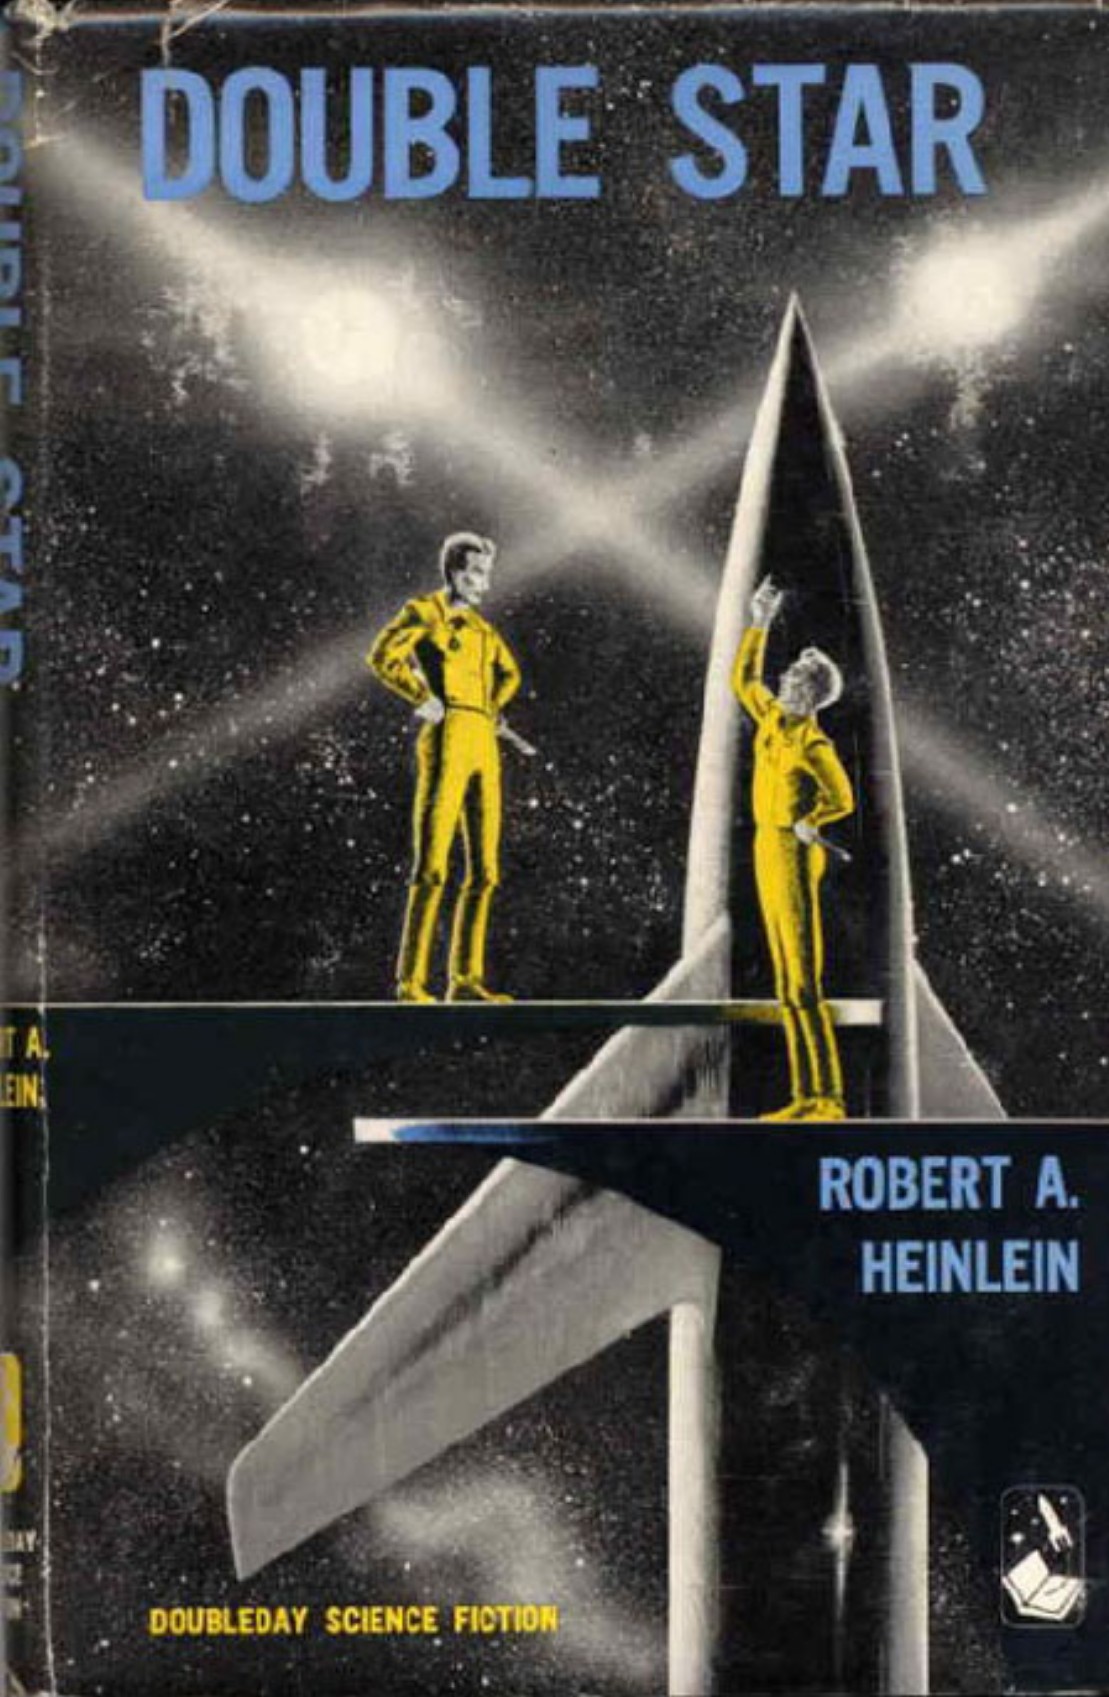 Robert A. Heinlein: Double Star (1986)